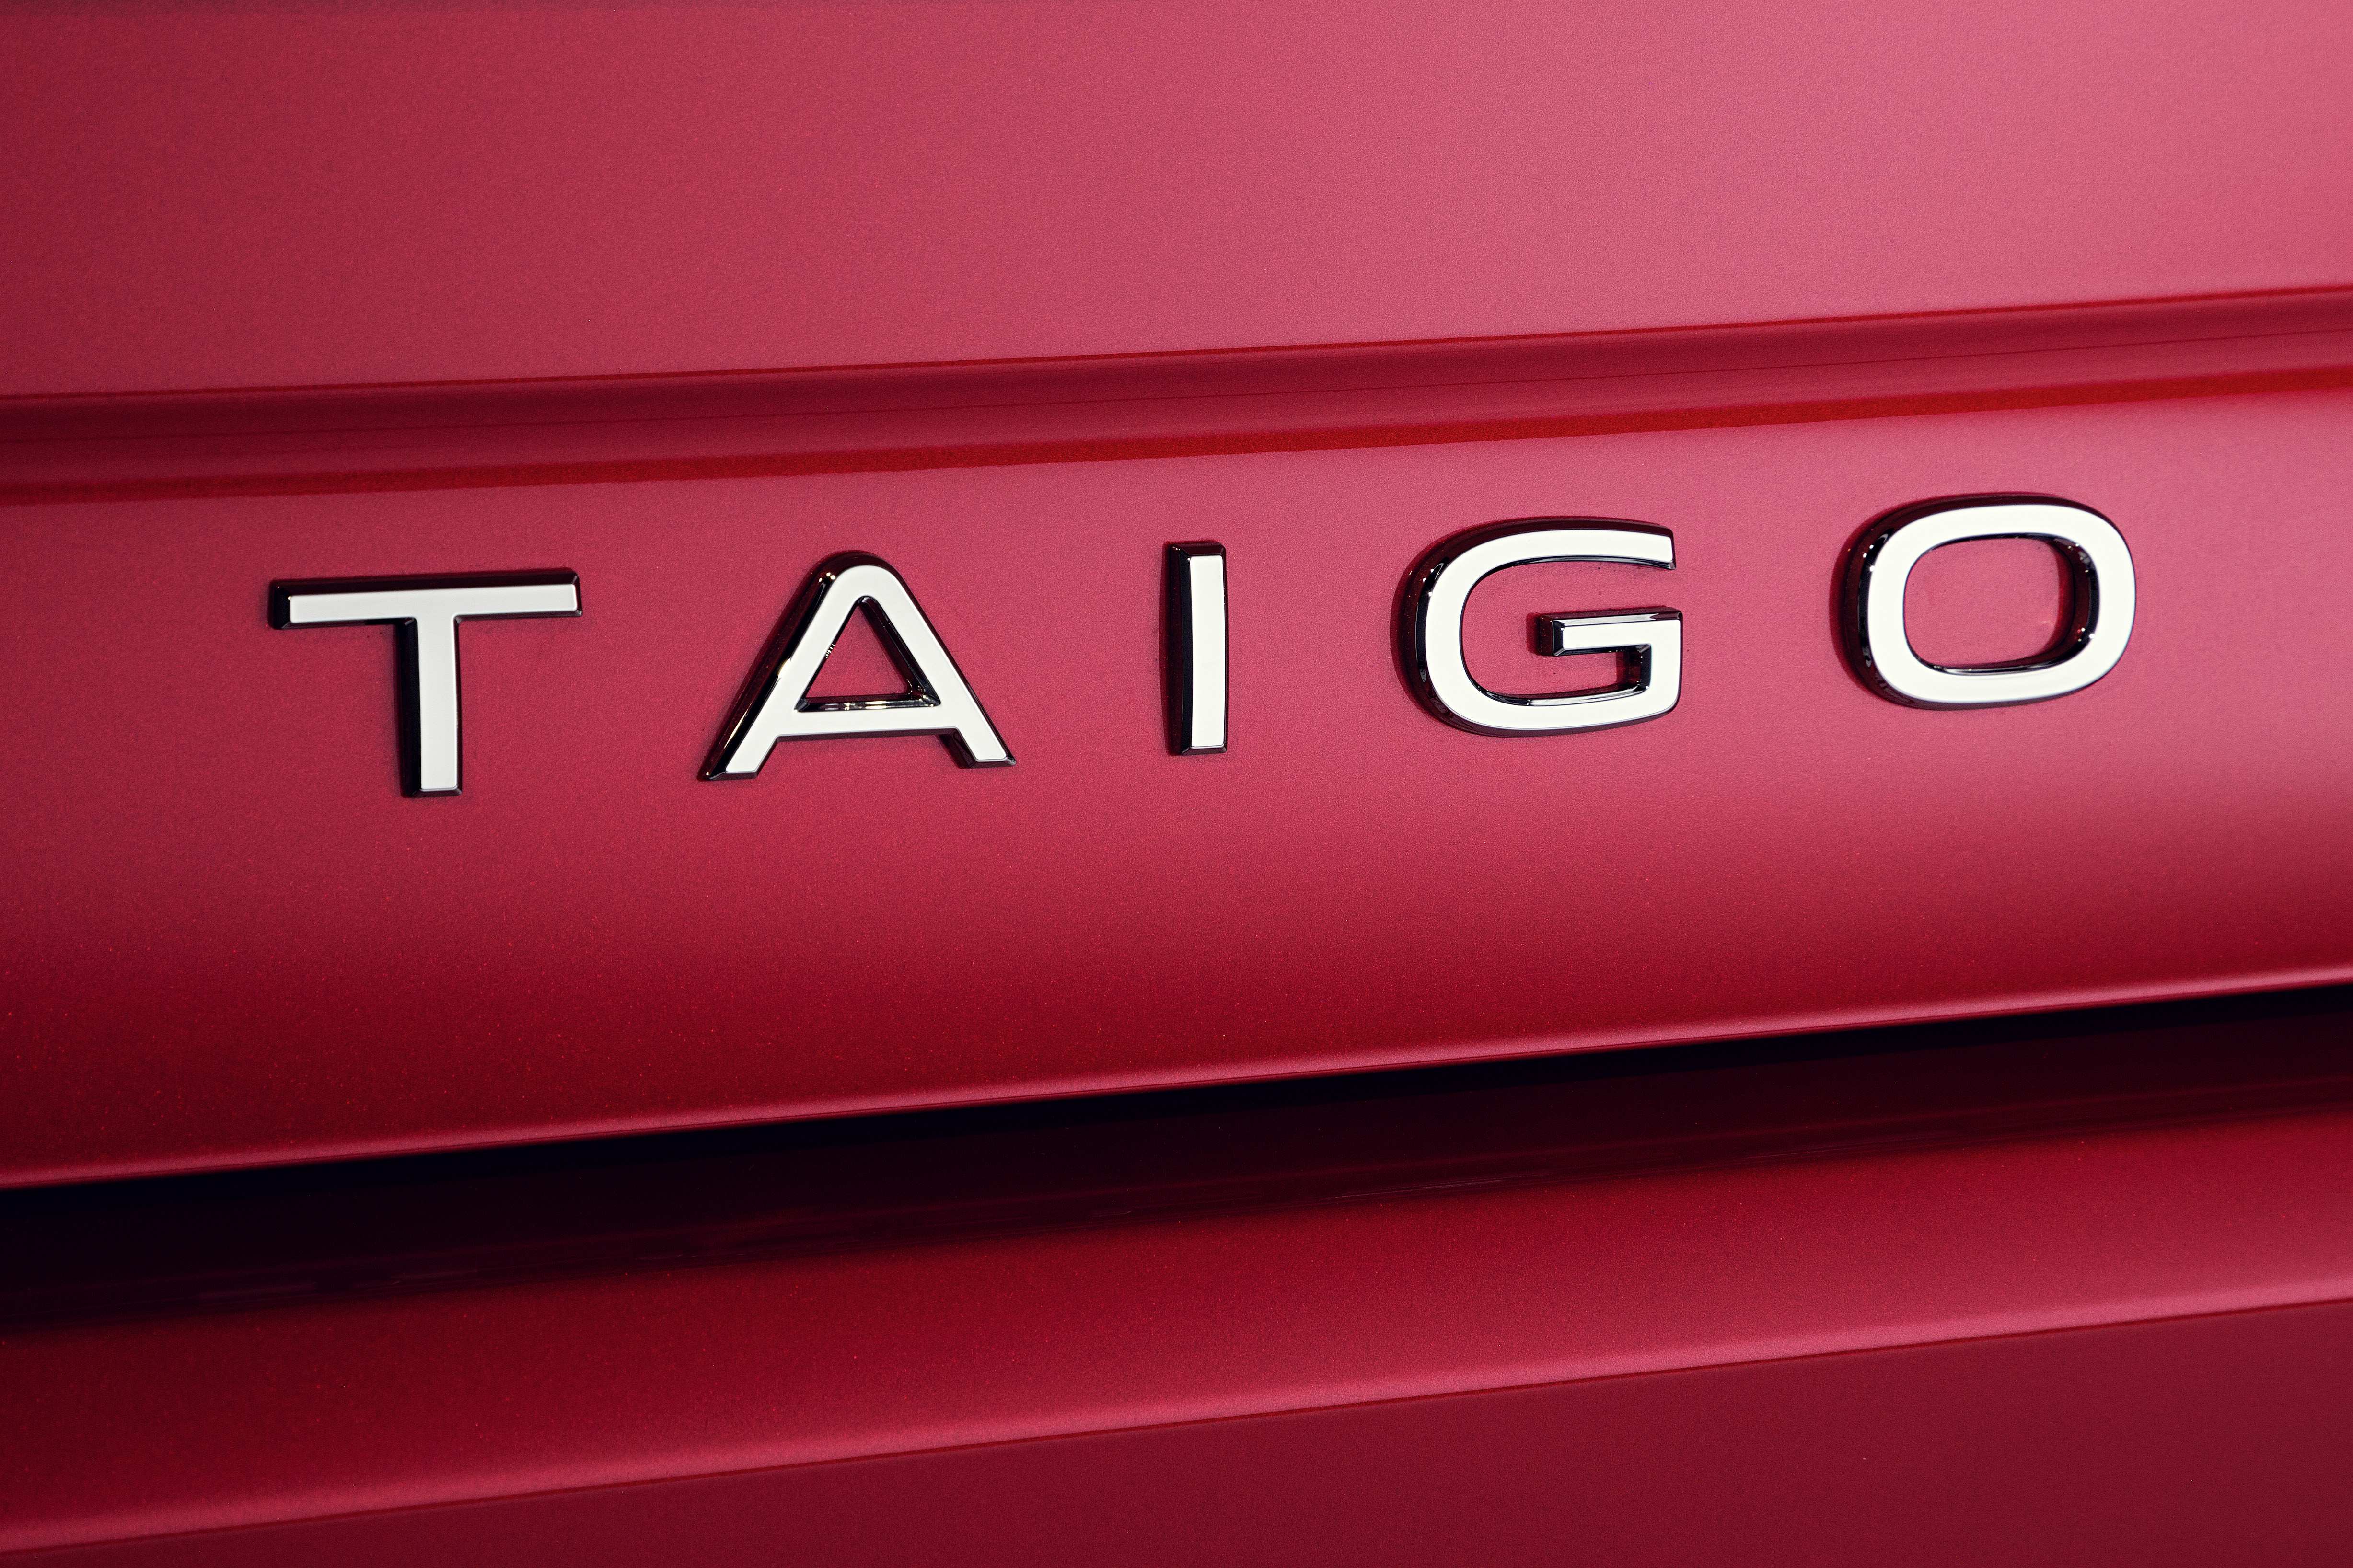 VW Taigo achterzijde tekstueel